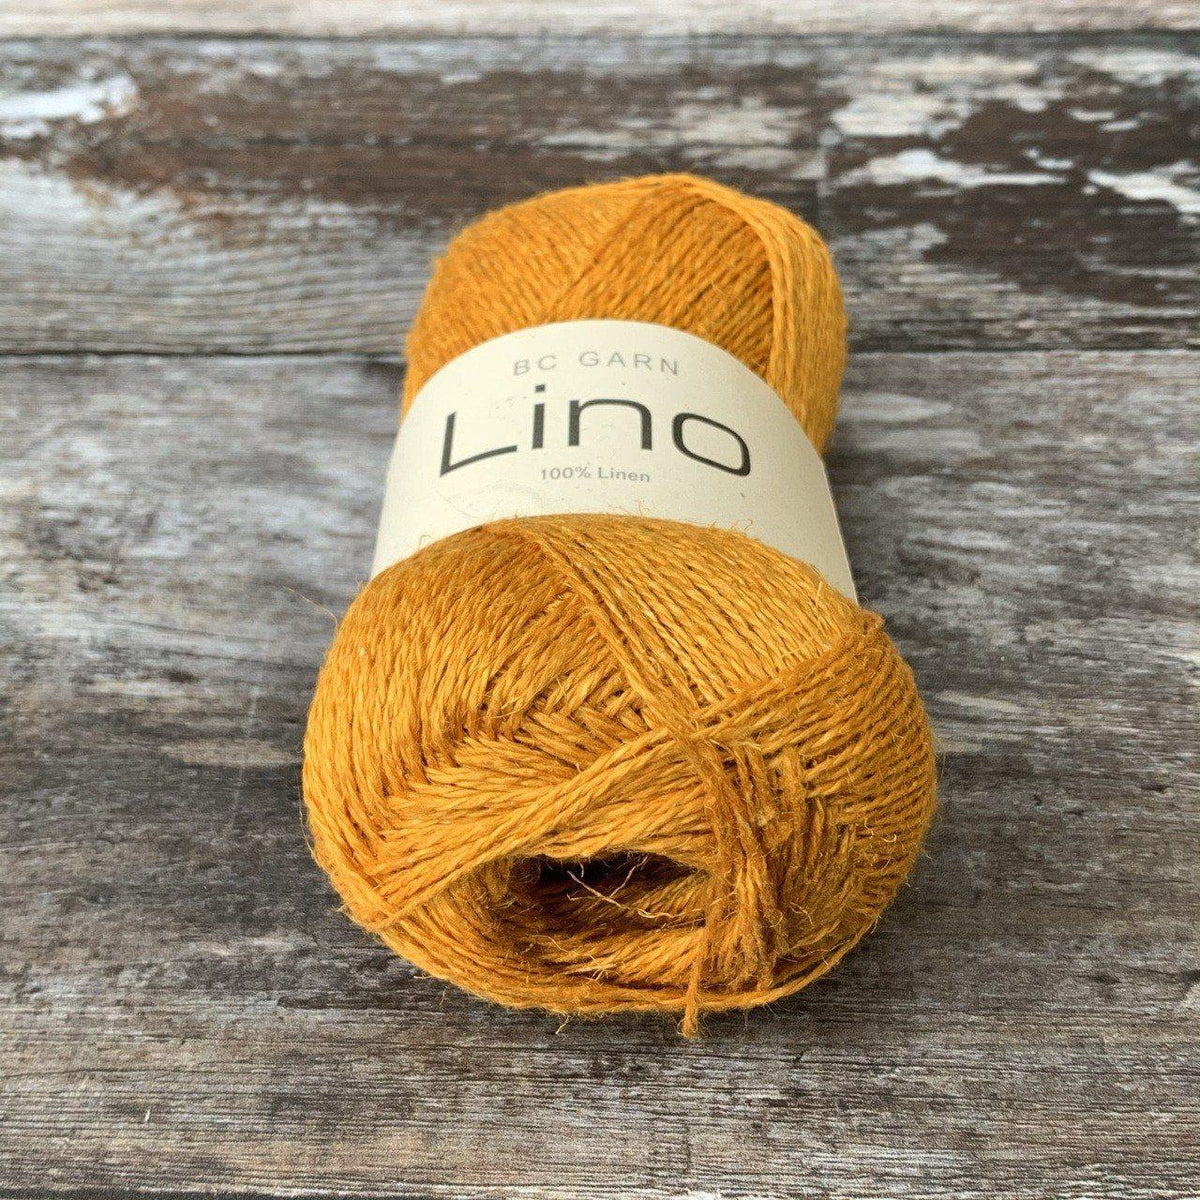 Overskæg pulver Il BC Garn Lino - 4ply Knitting Yarn